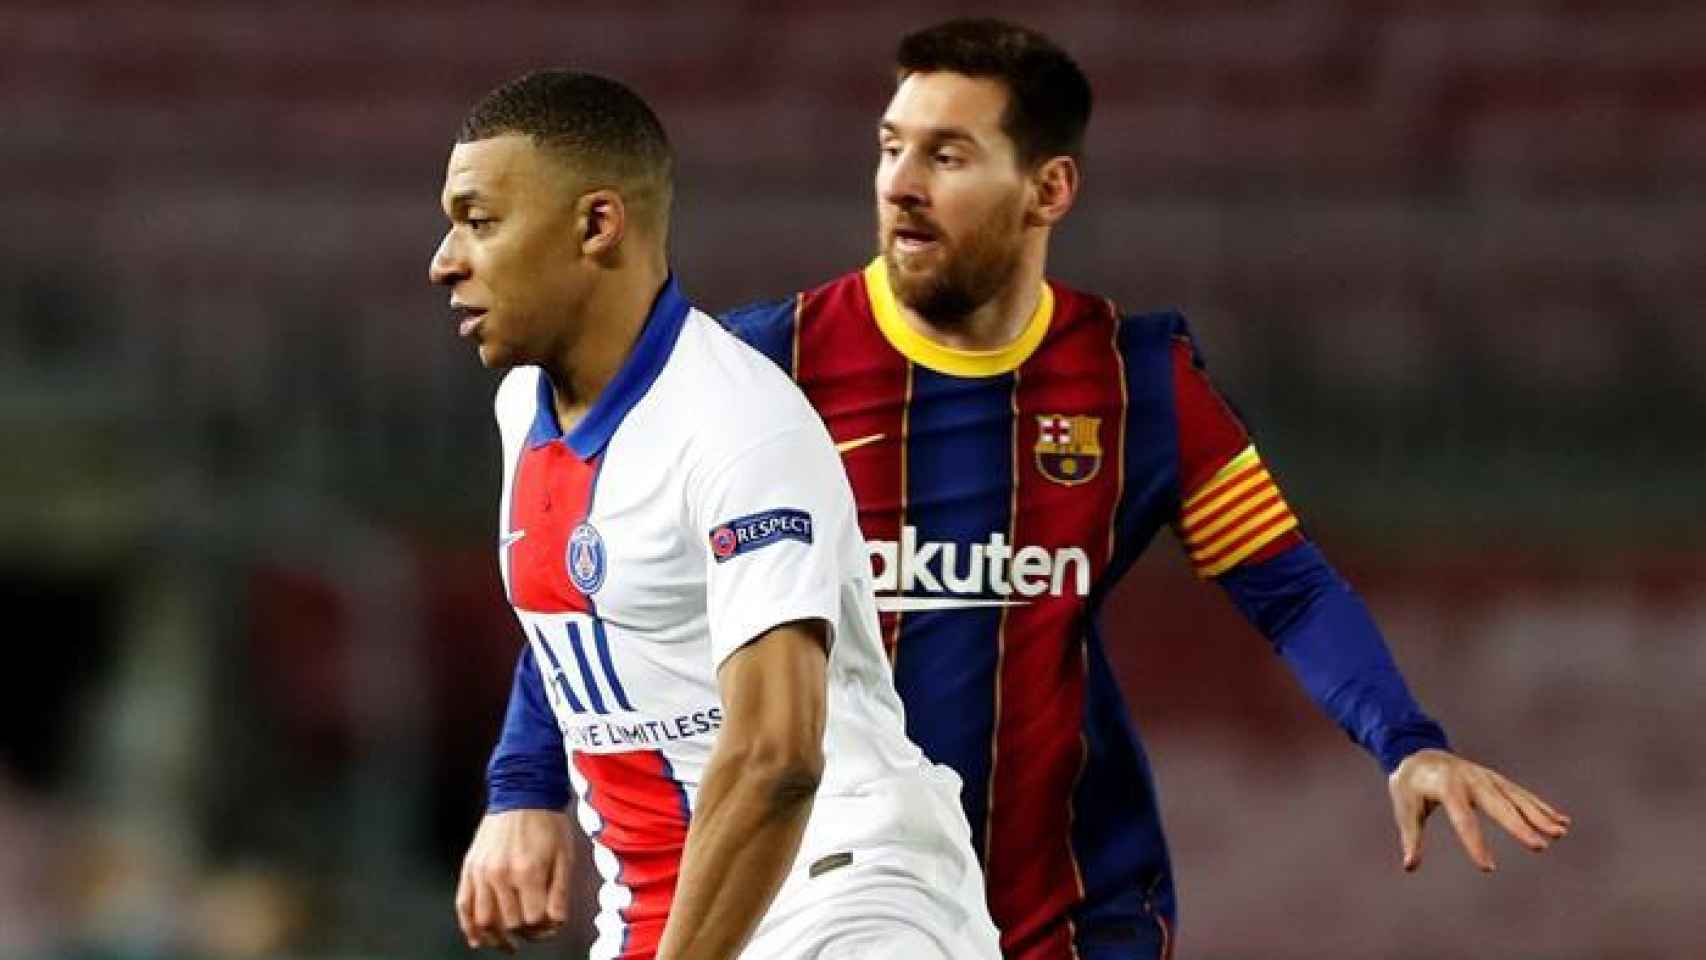 Kylian Mbappé y Leo Messi, en el Barcelona - PSG de la Champions League 2020/2021